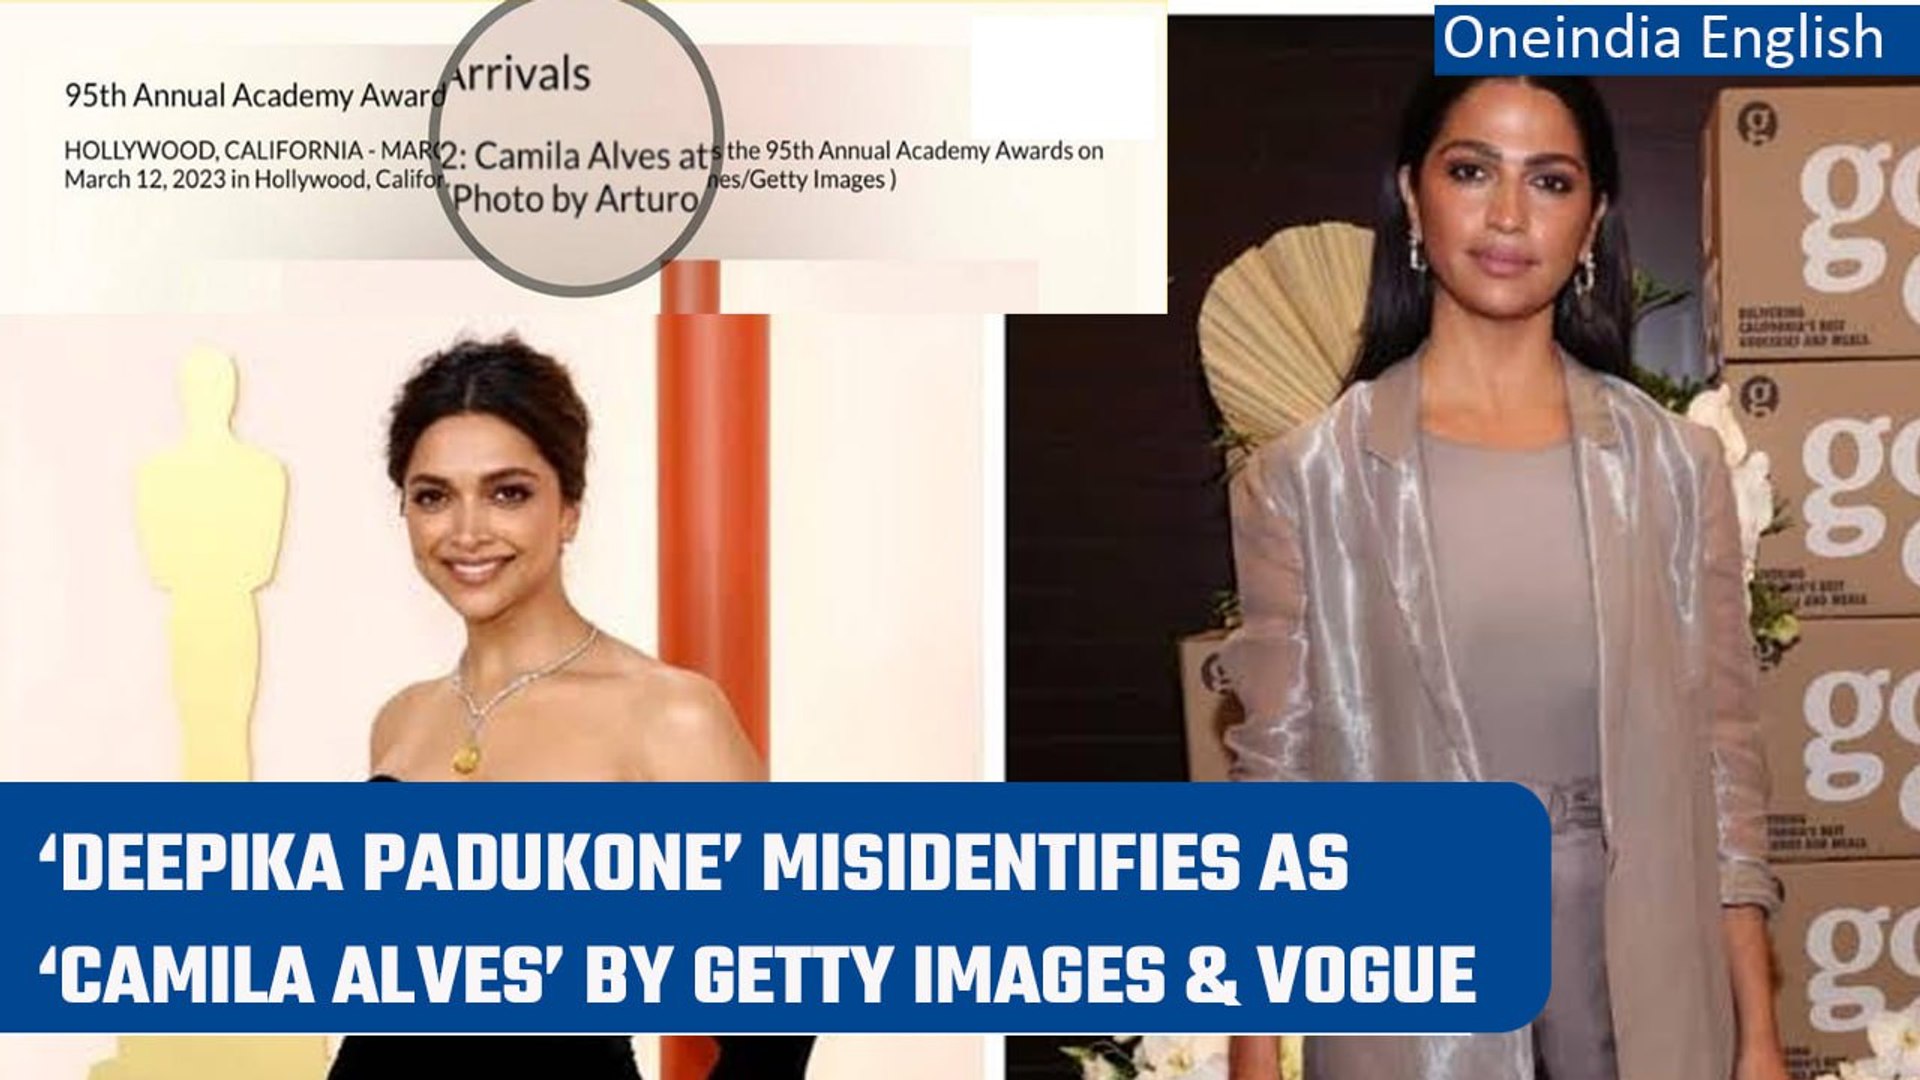 Deepika Padukone to attend Oscars 2023 as a presenter love 1